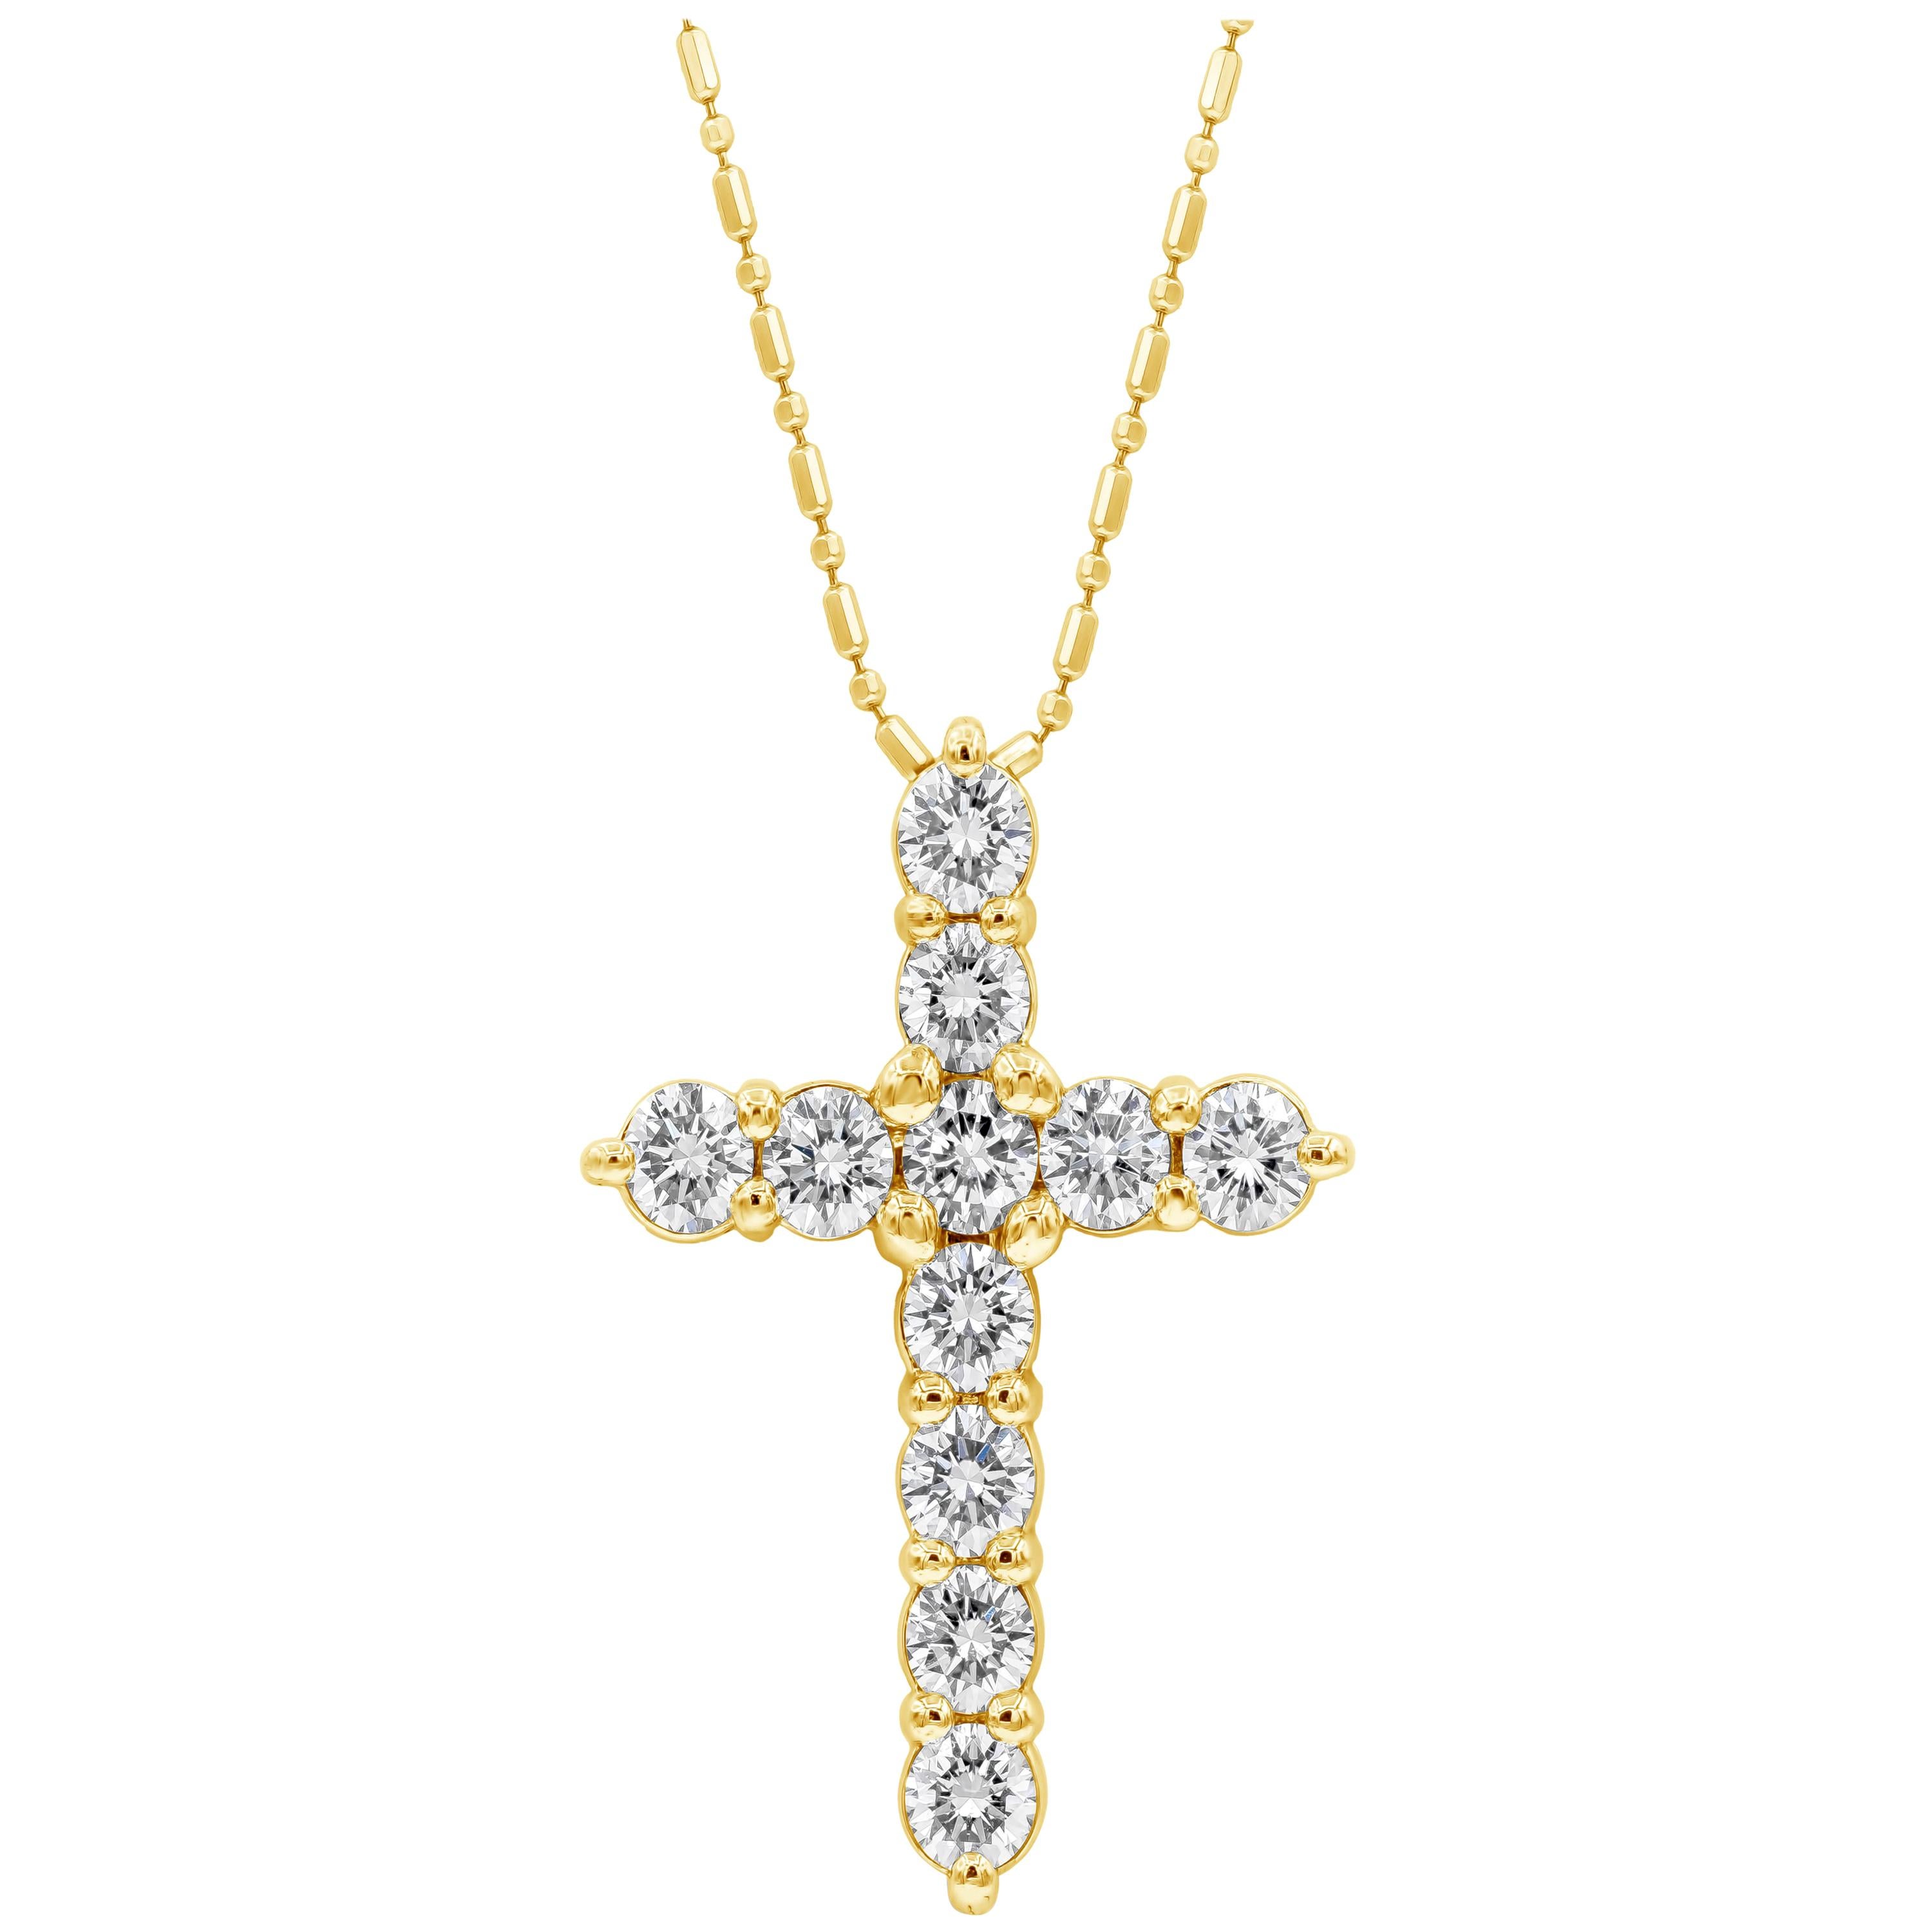 Roman Malakov 1.56 Carat Round Diamond Cross Pendant Necklace in Yellow Gold